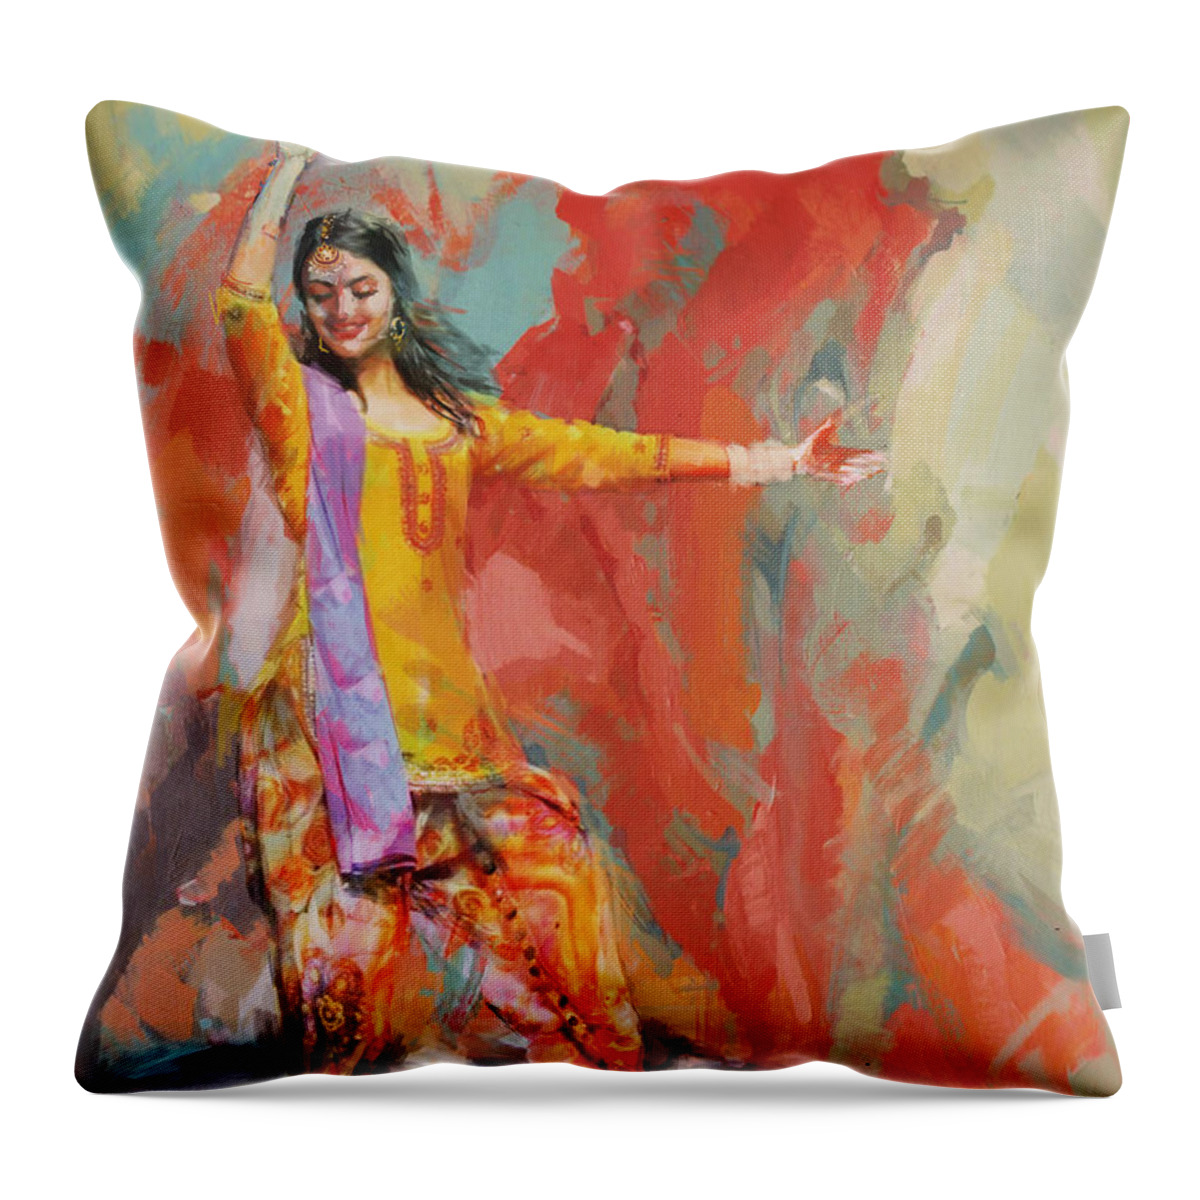 Sindh Throw Pillow featuring the painting 11 pakistan folk Punjab by Maryam Mughal 